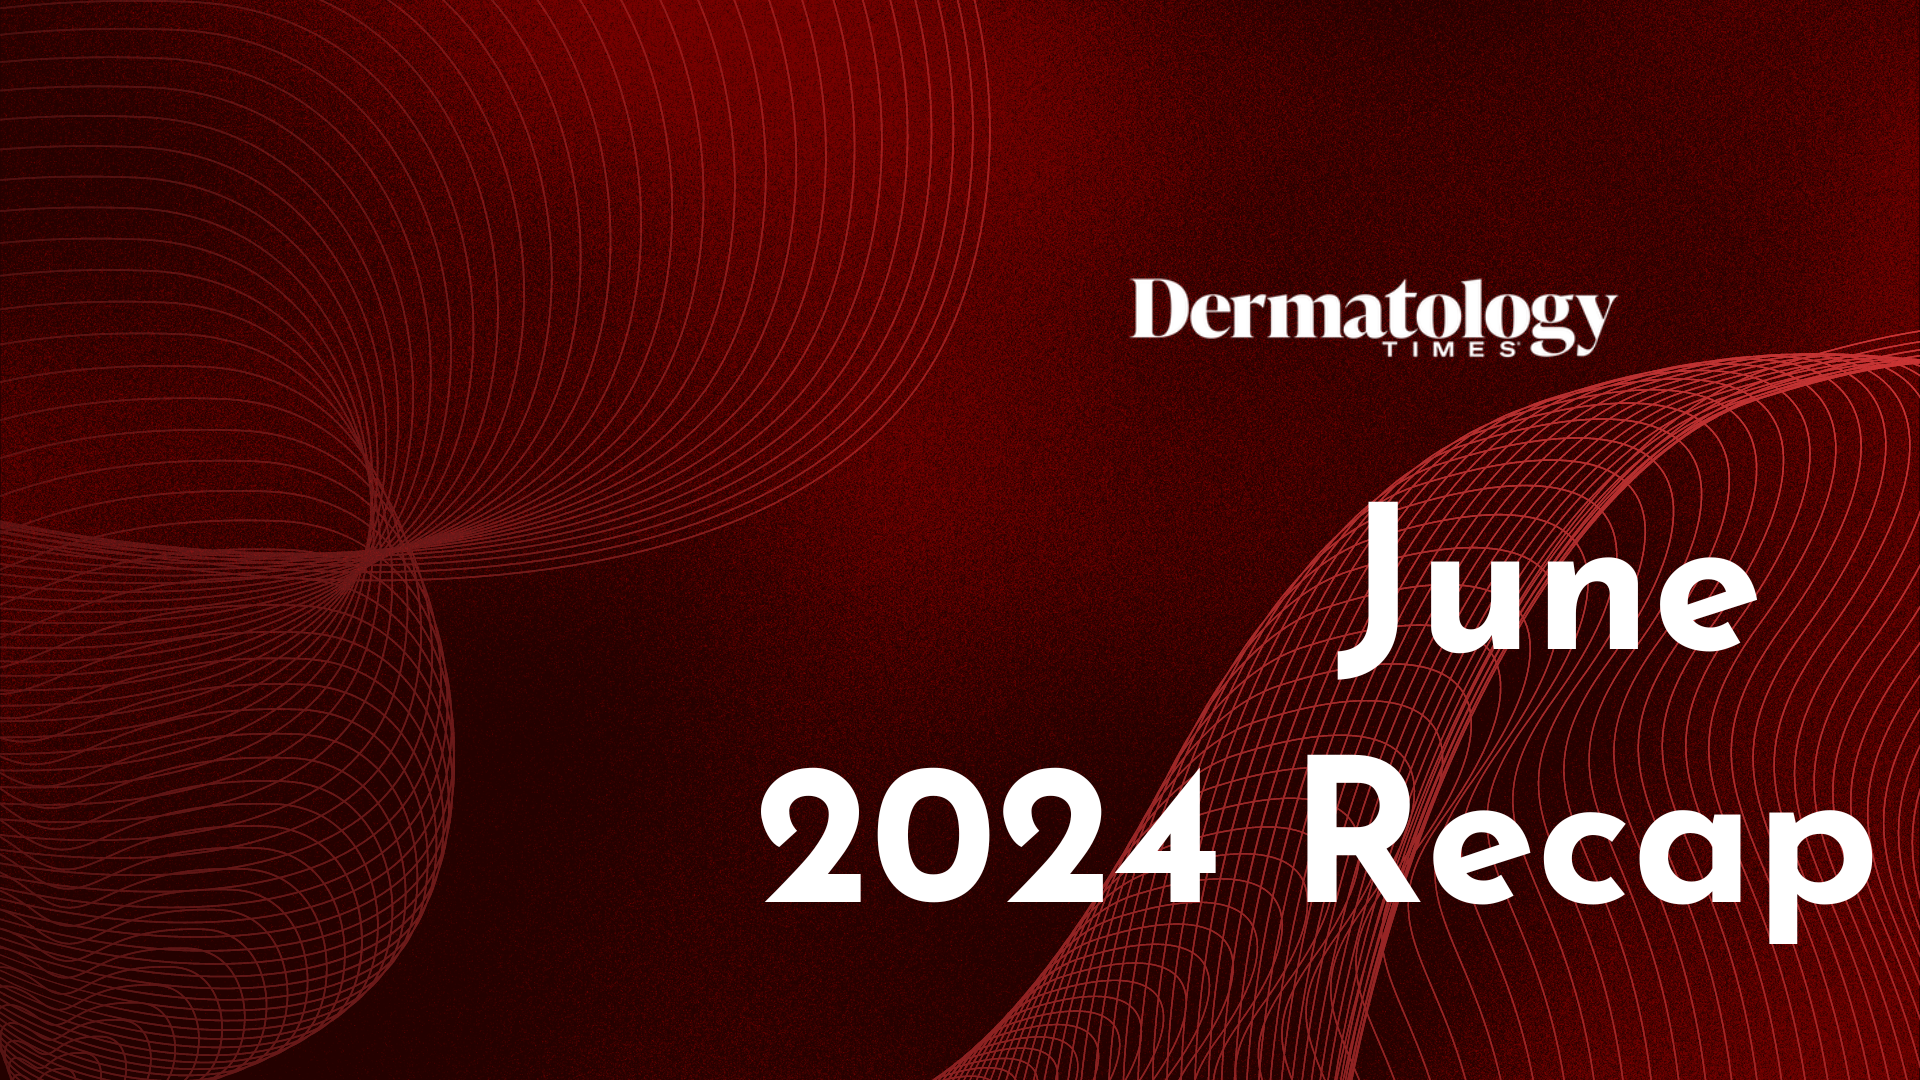 Dermatology Times June 2024 Recap